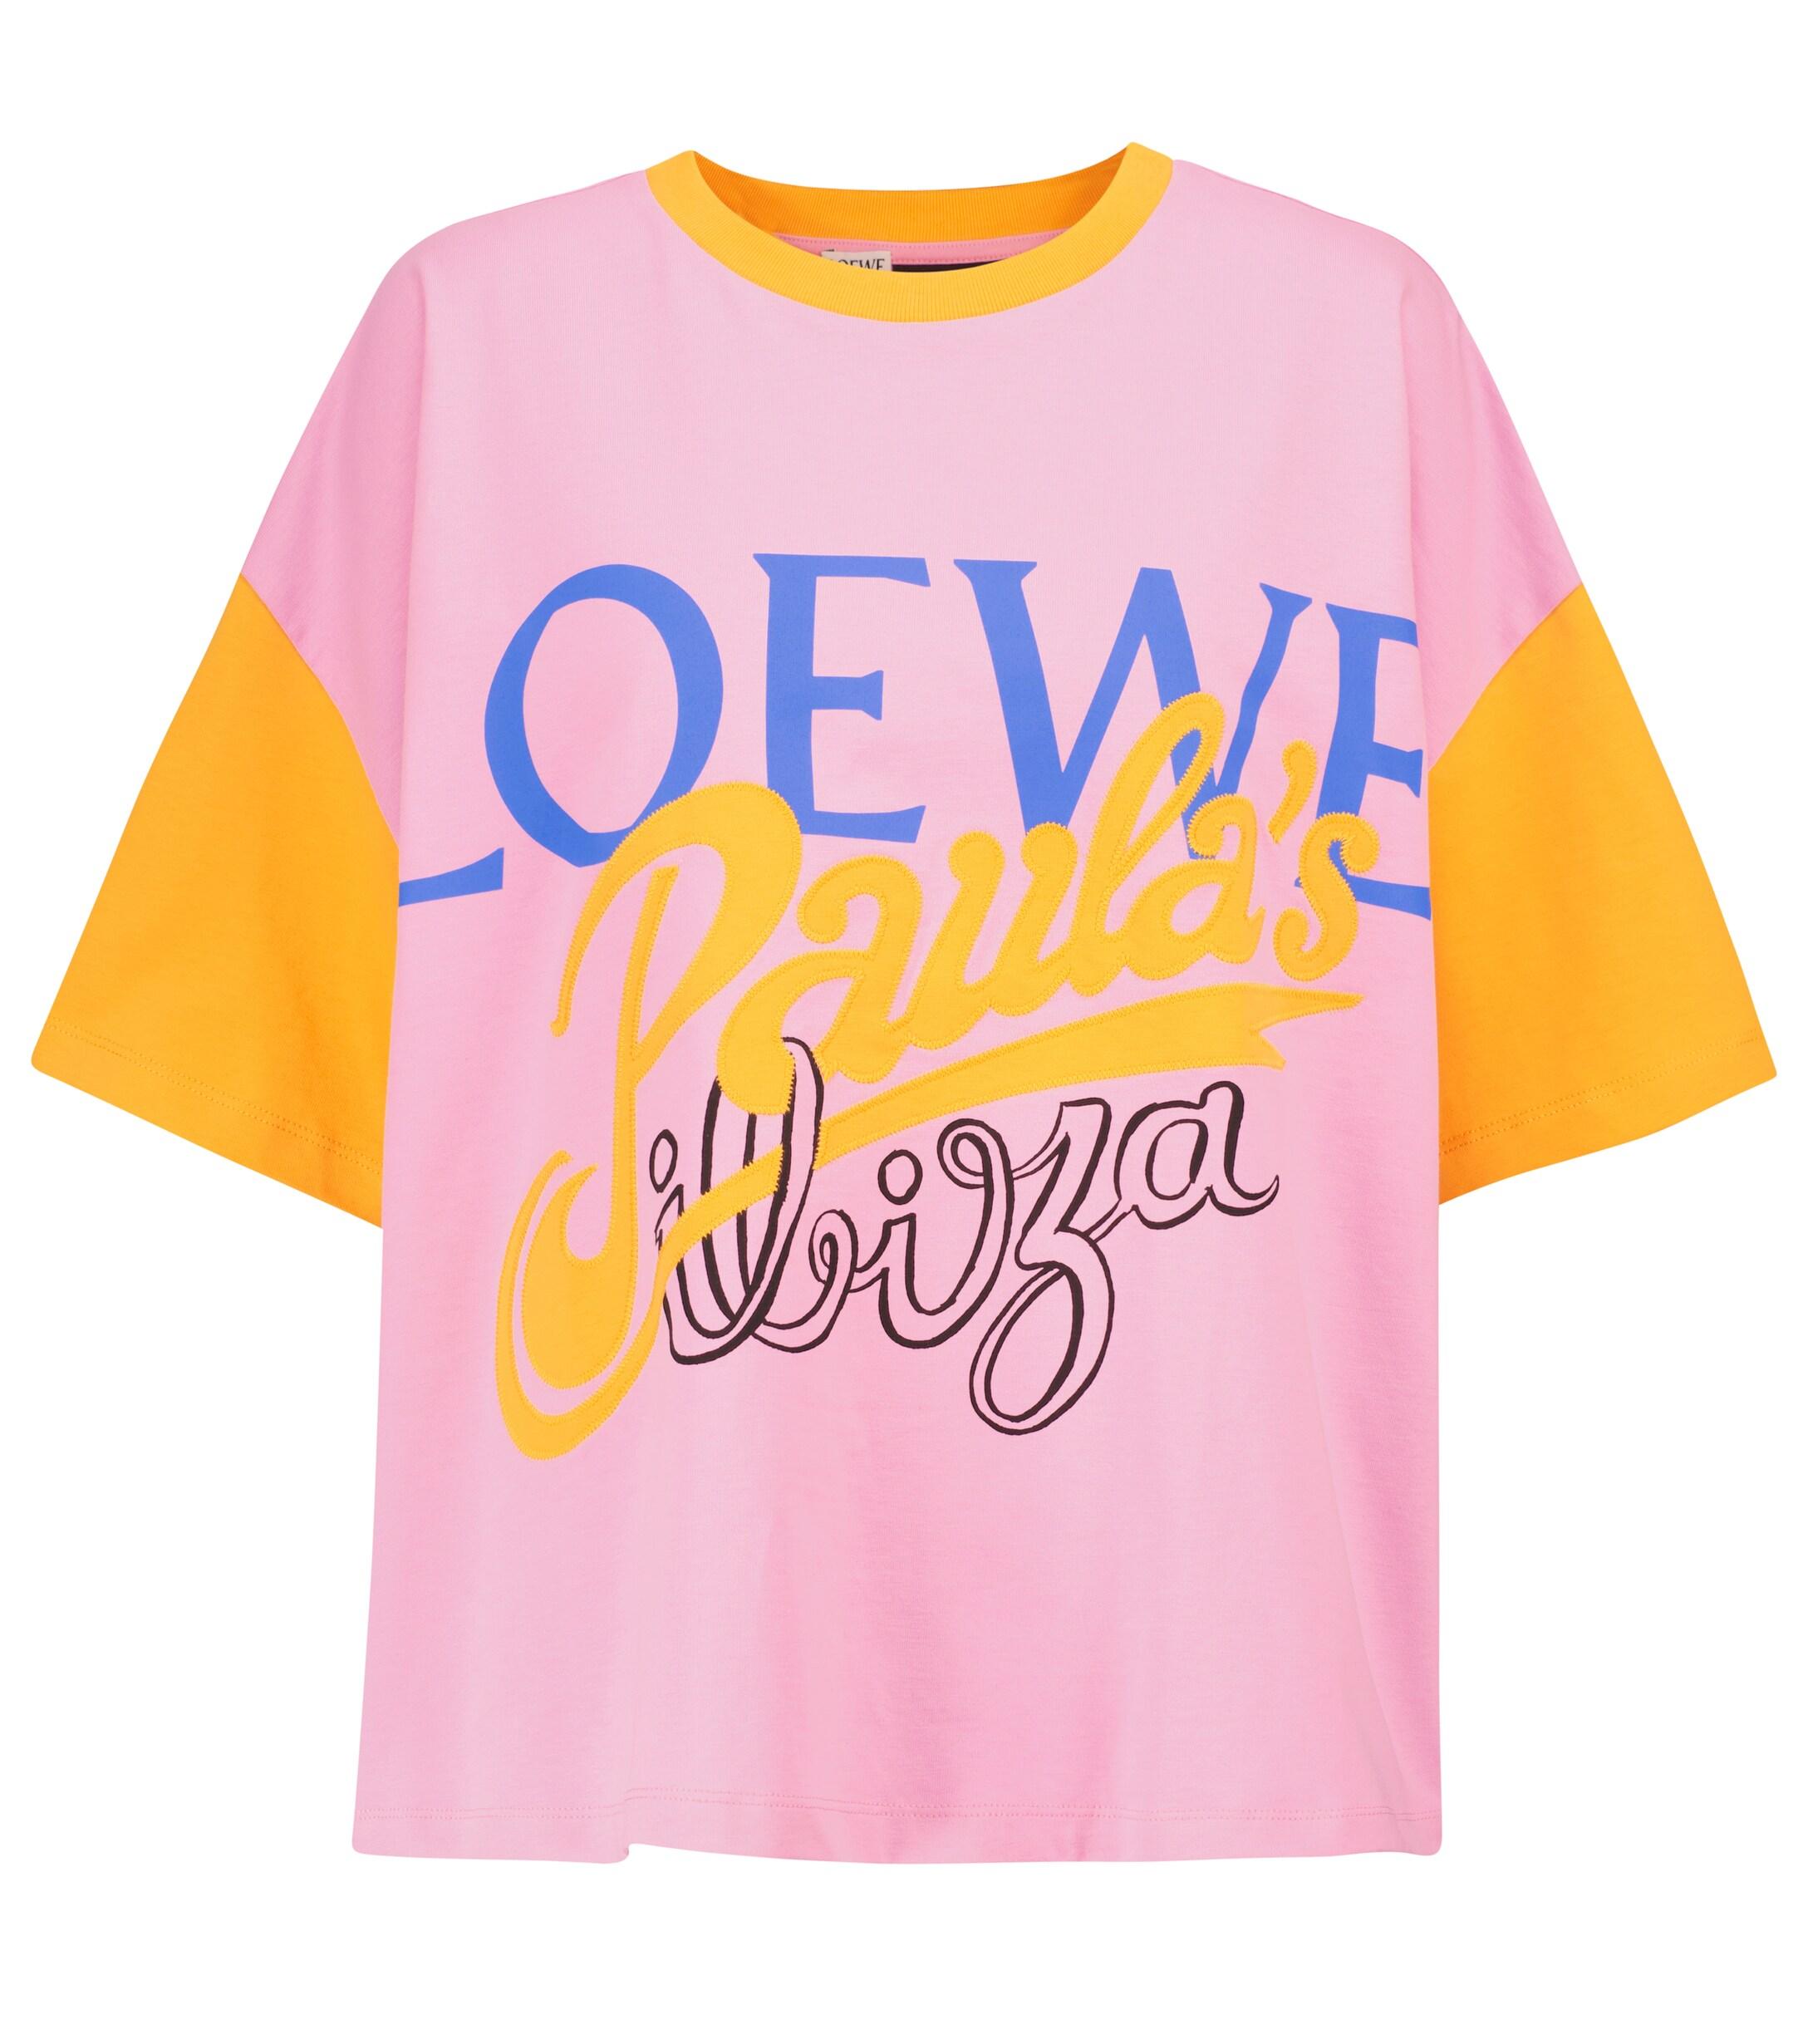 Paula's Ibiza camiseta de algodón Loewe de color Rosa | Lyst